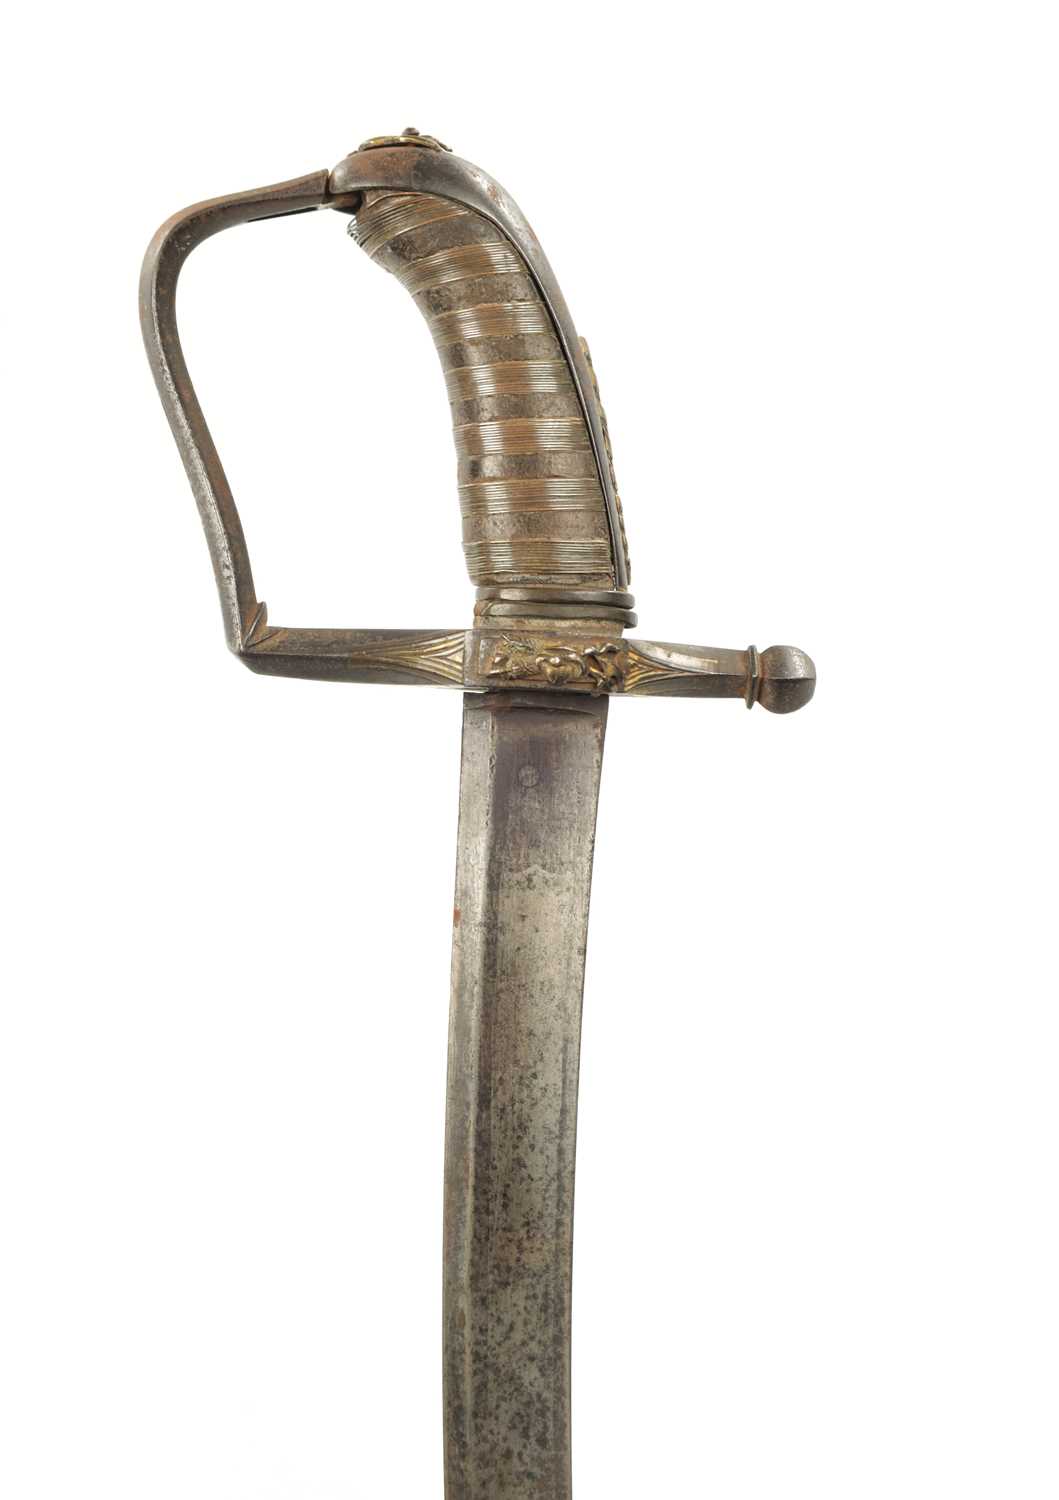 A 1796 PRESENTATION OFFICER'S SWORD